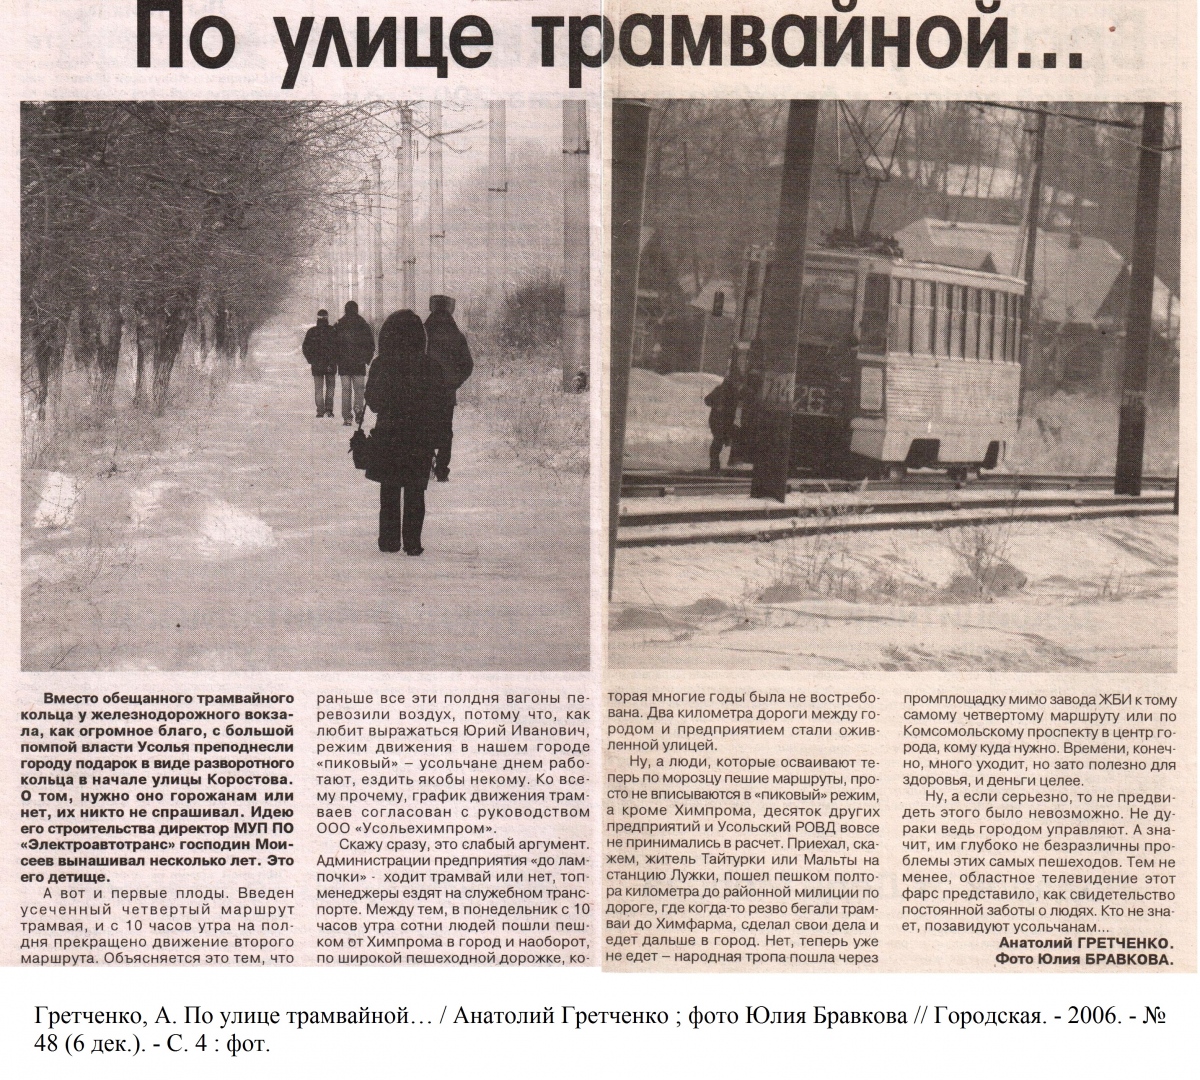 Usolye-Sibirskoye — Newspaper article